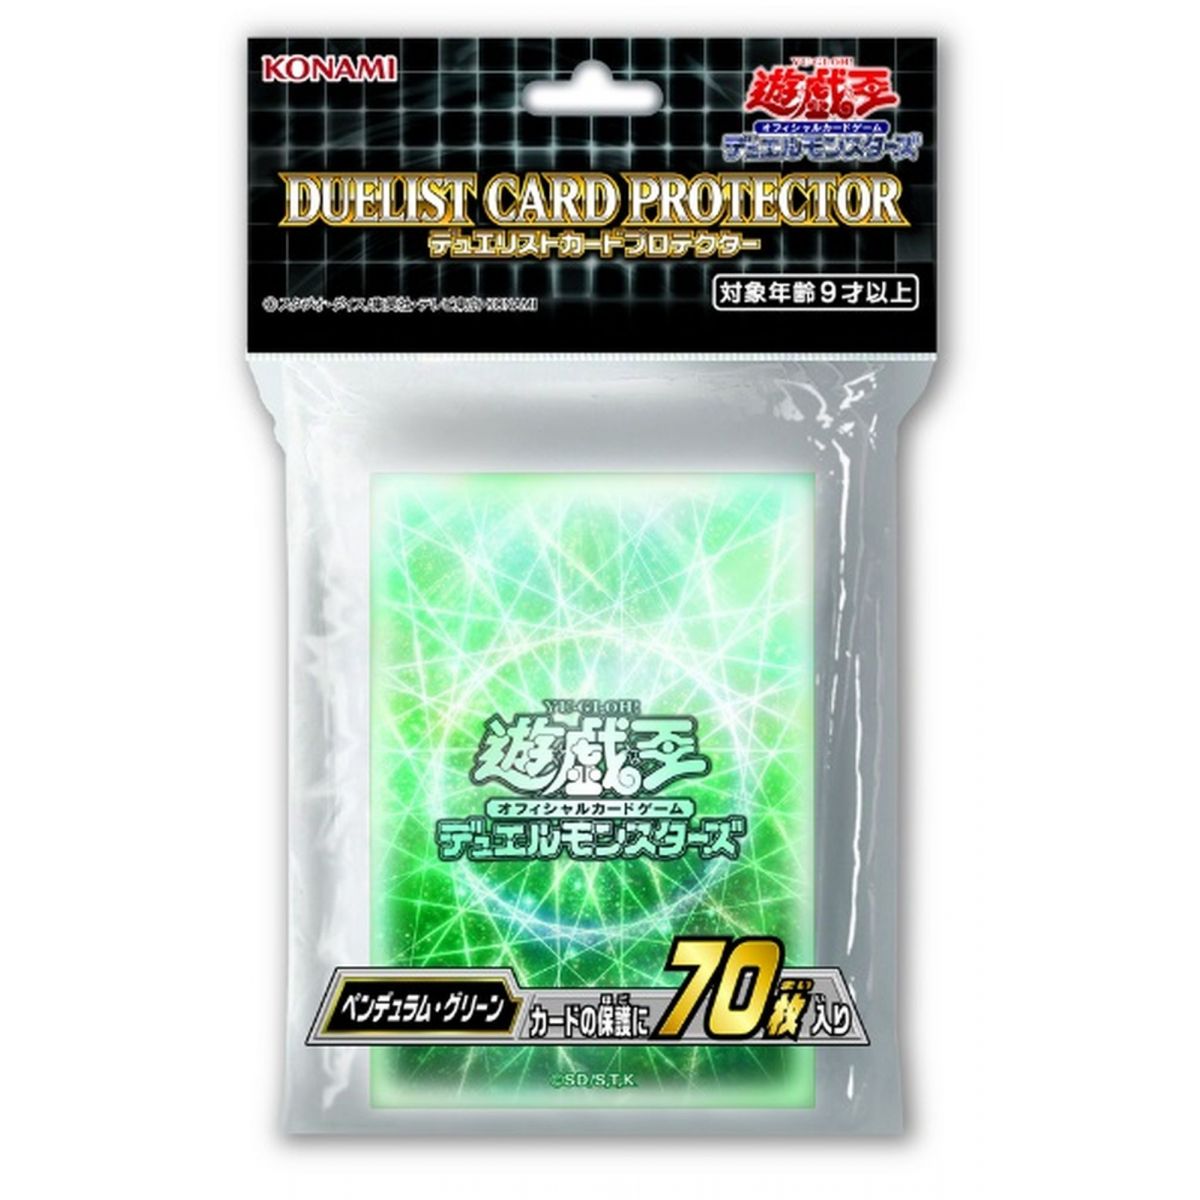 Item Yu Gi Oh! - Card Protectors - Konami Pendulum Duelist Card Protector (70) - OCG